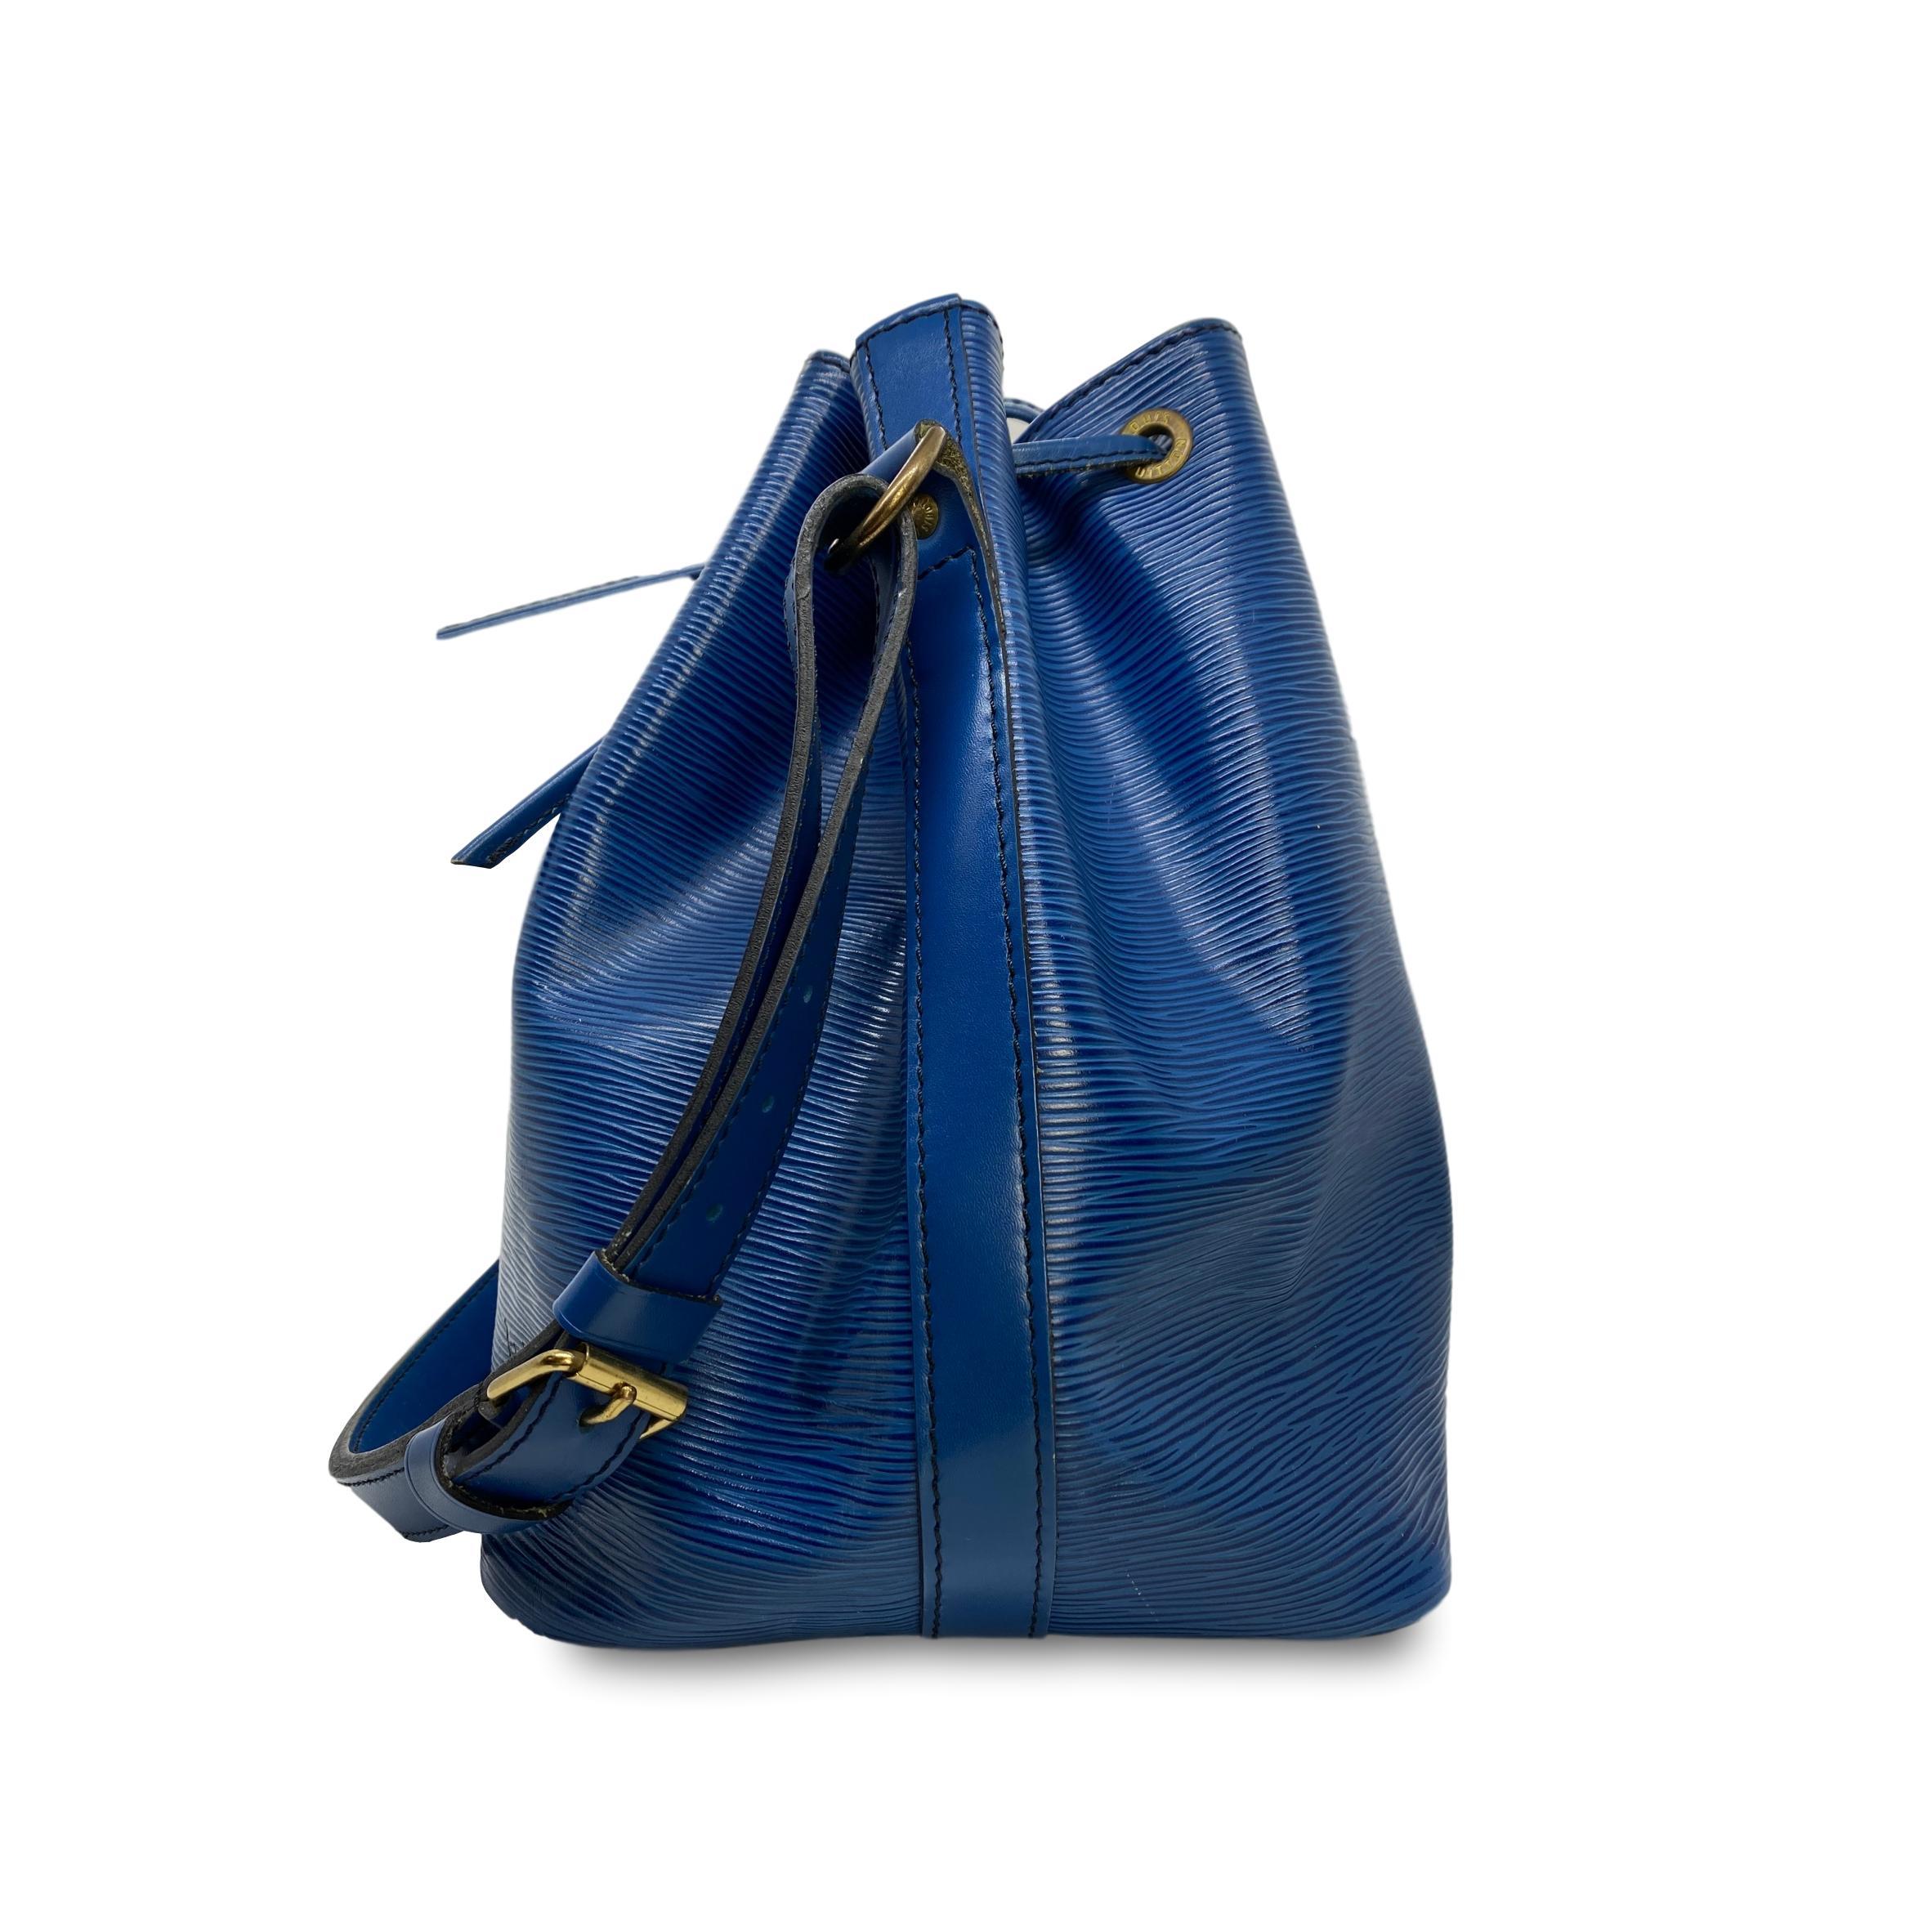 Women's or Men's Louis Vuitton Noe PM Bucket Bag in Toledo Blue EPI Leather, France 1995.